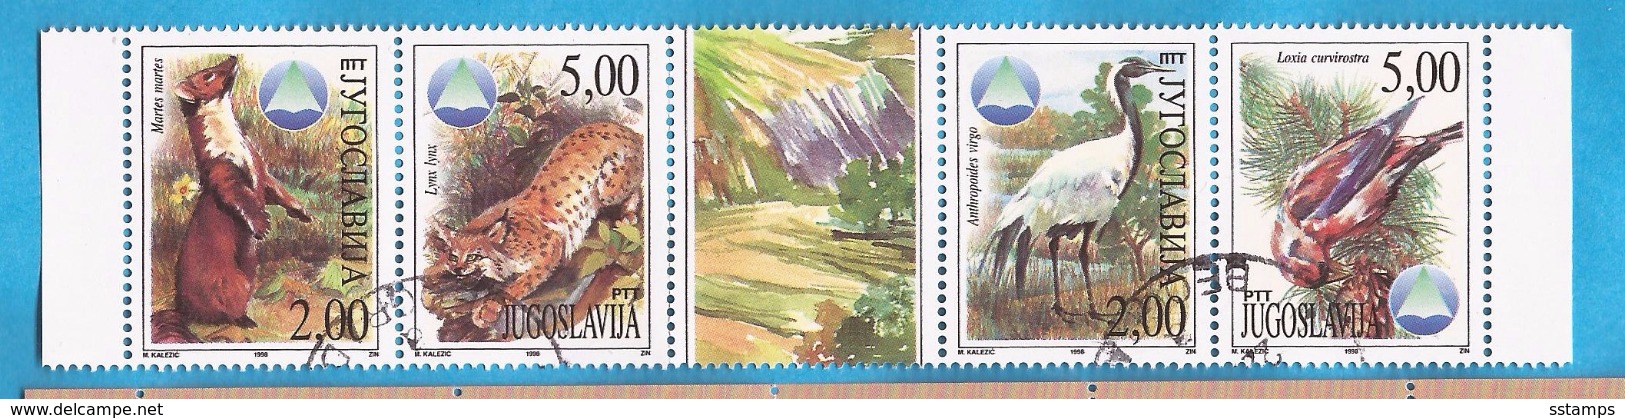 1998  FAUNA WWF  VOEGEL  BIRDS   GESCHUEZTE TIERE JUGOSLAVIJA JUGOSLAWIEN  USED - Used Stamps